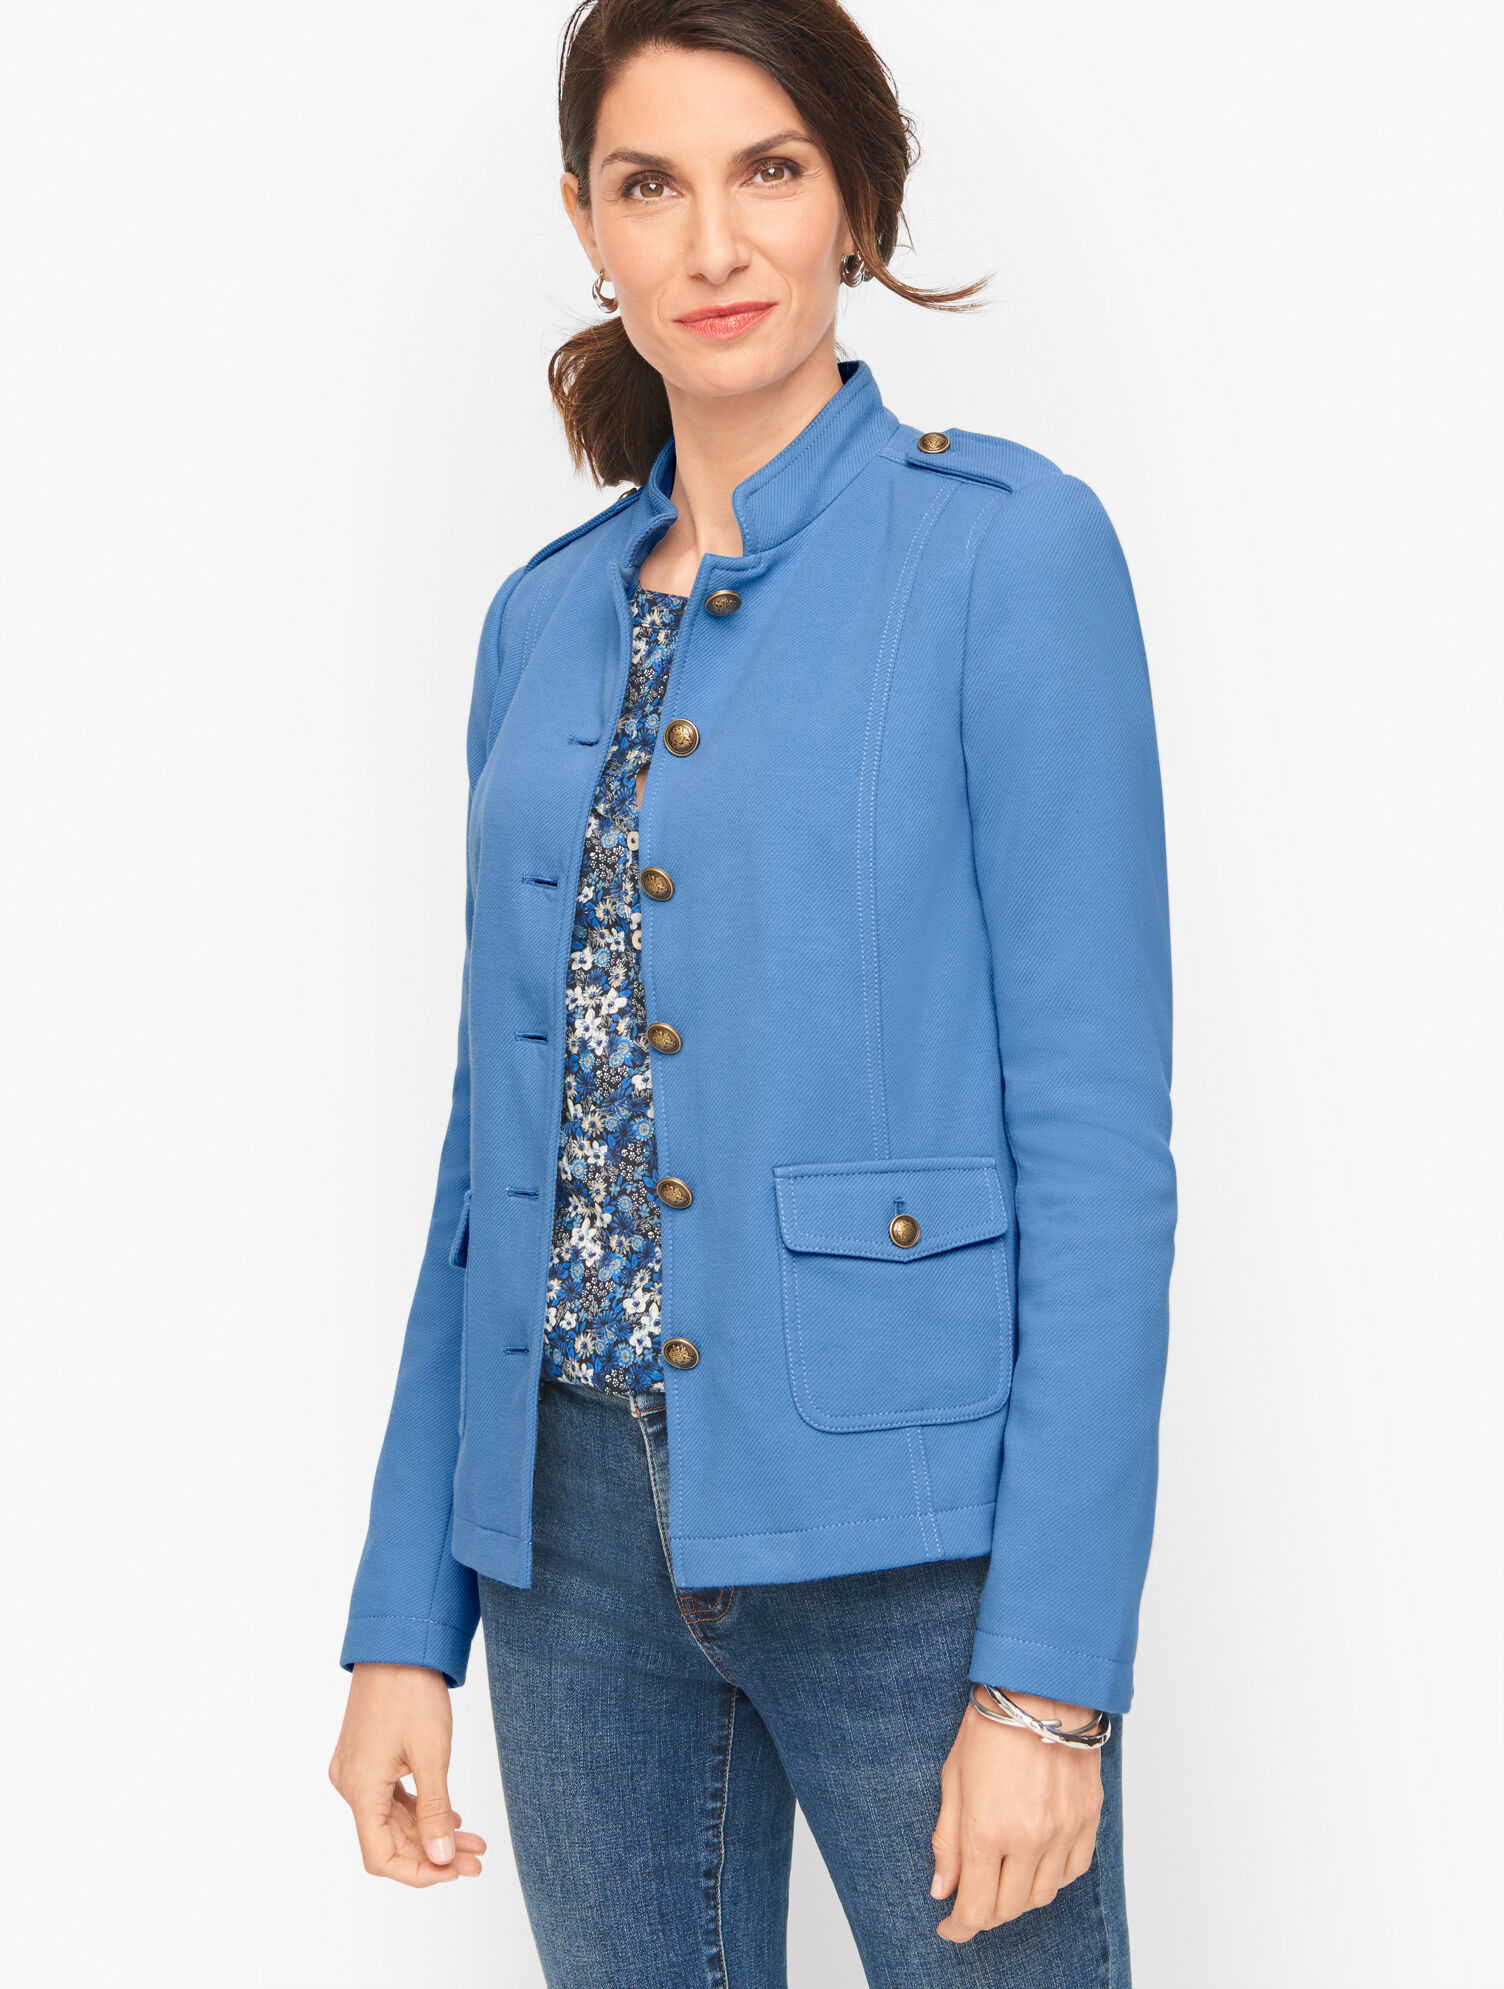 Talbots Wool Blend Blazer Jacket Womens Size 2P 2 Petite Pockets Knit Gray